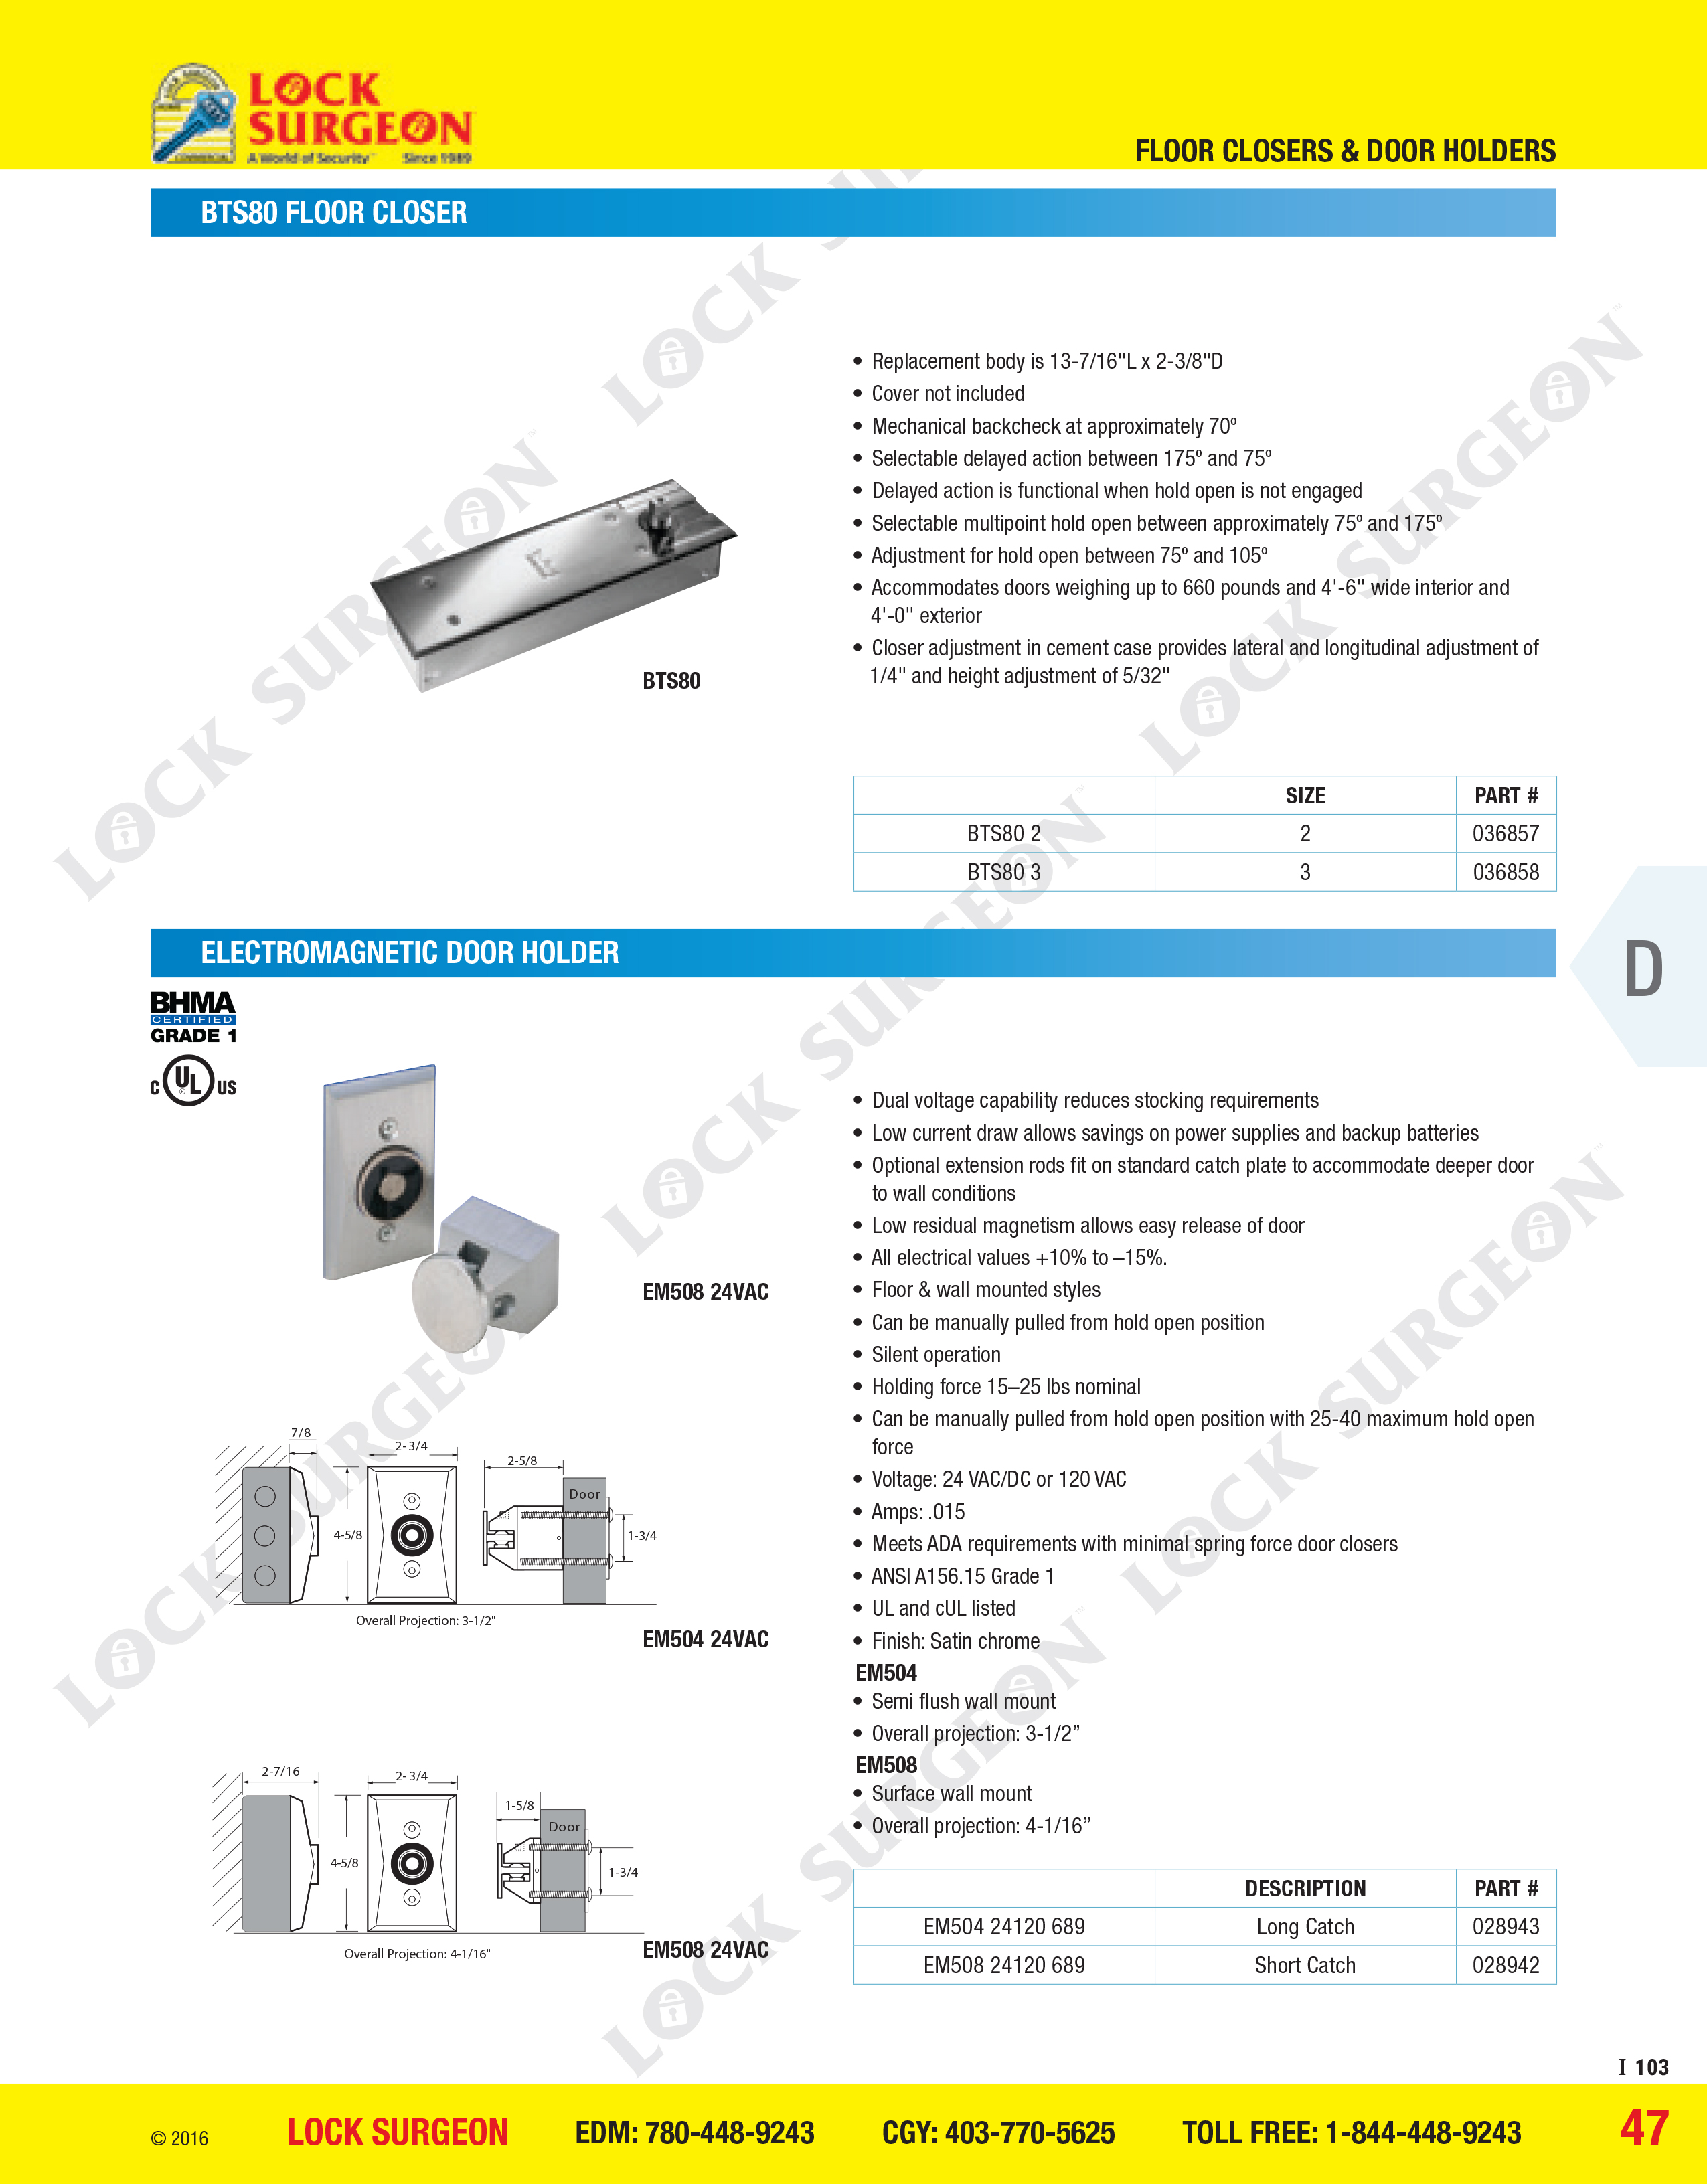 Acheson BTS80 Floor closer and Electromagnetic door holder